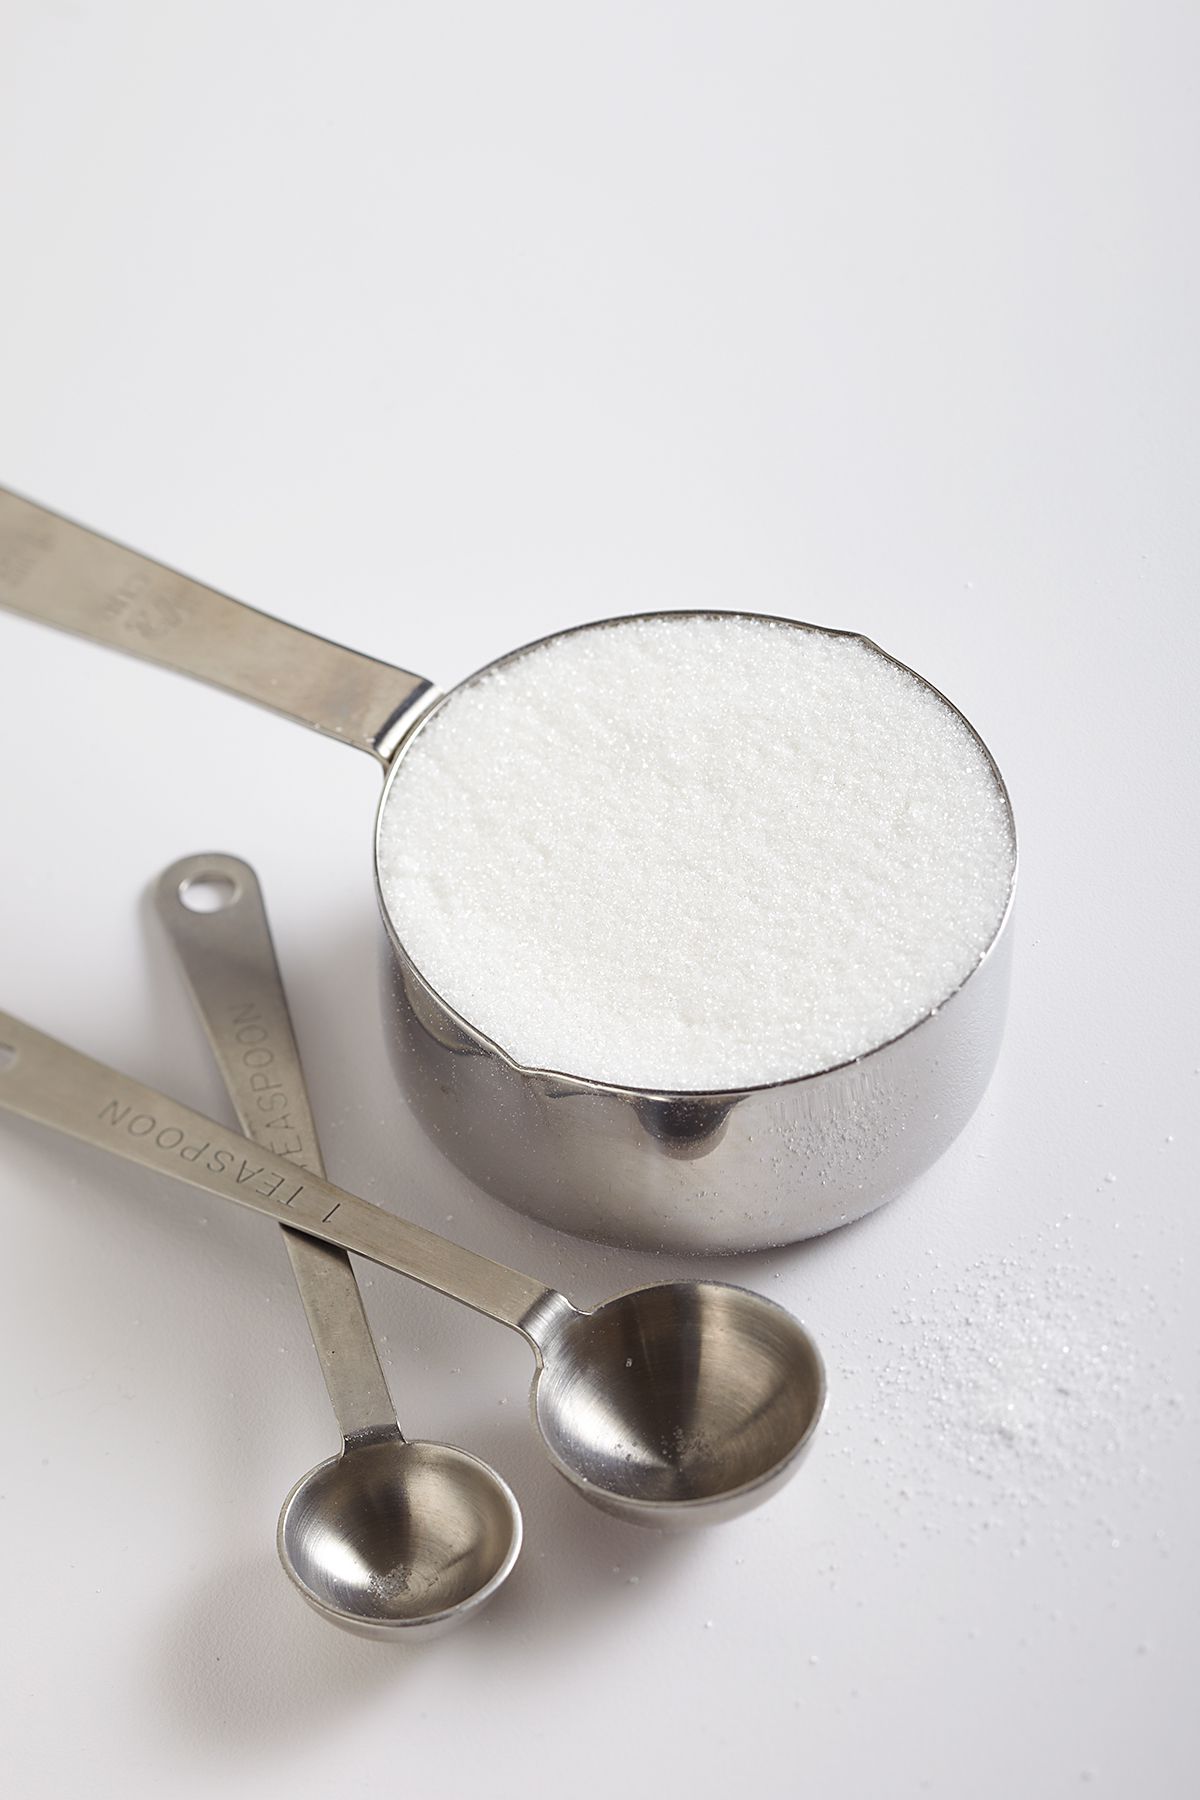 Sugar in silver measuring cup with measuring spoons